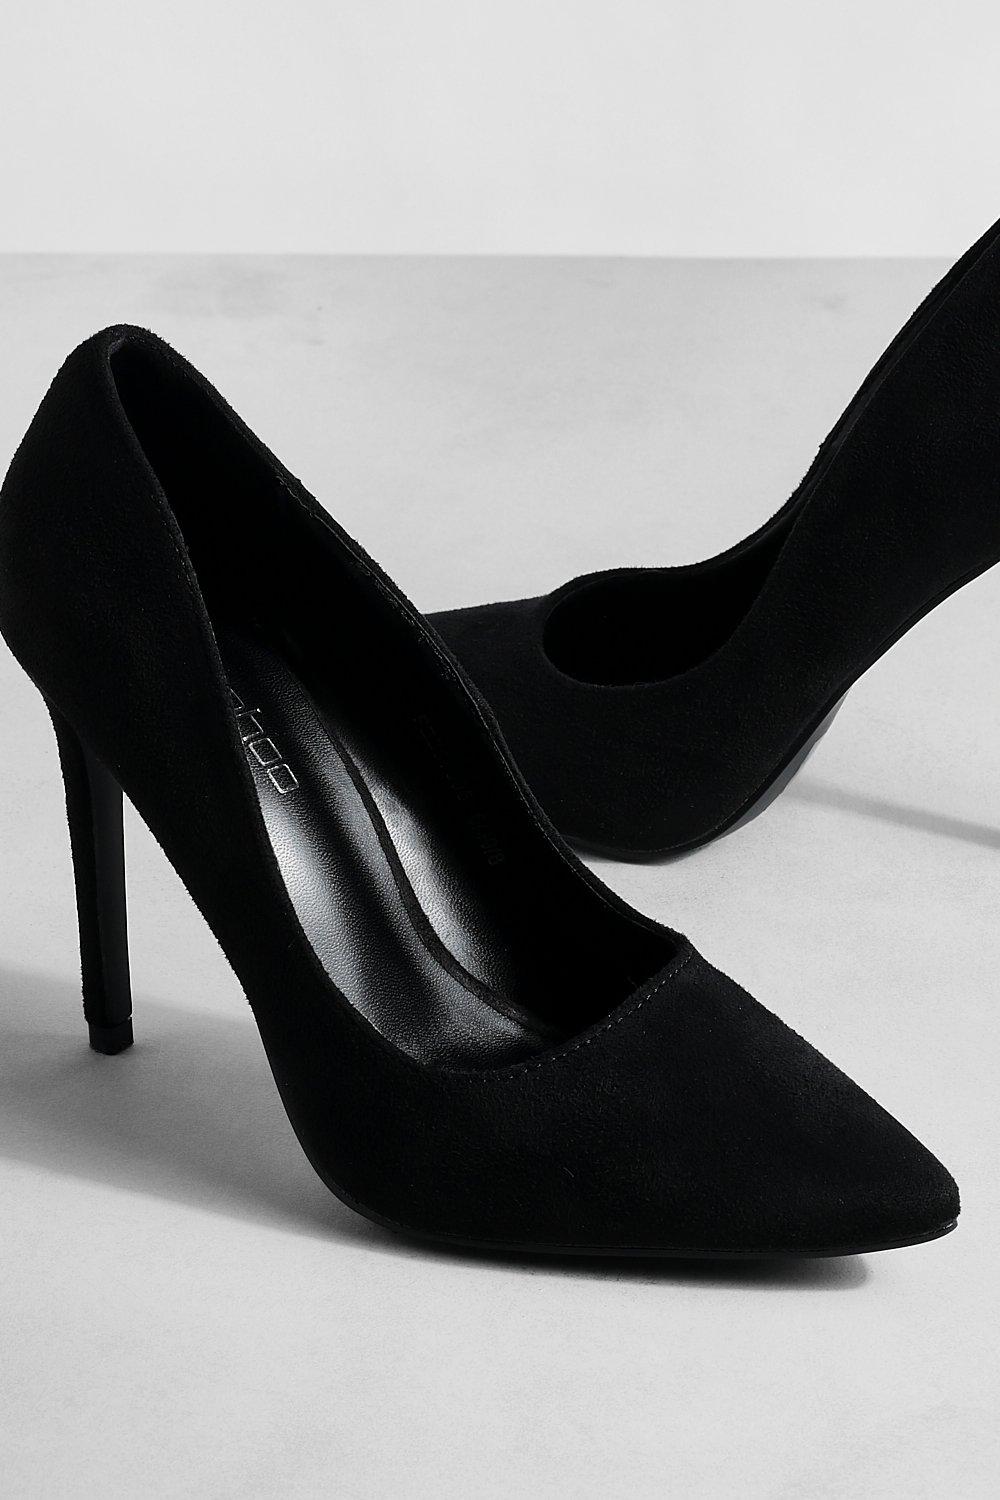 https://media.boohoo.com/i/boohoo/fzz80895_black_xl_4/female-black-basic-stiletto-heel-court-shoes